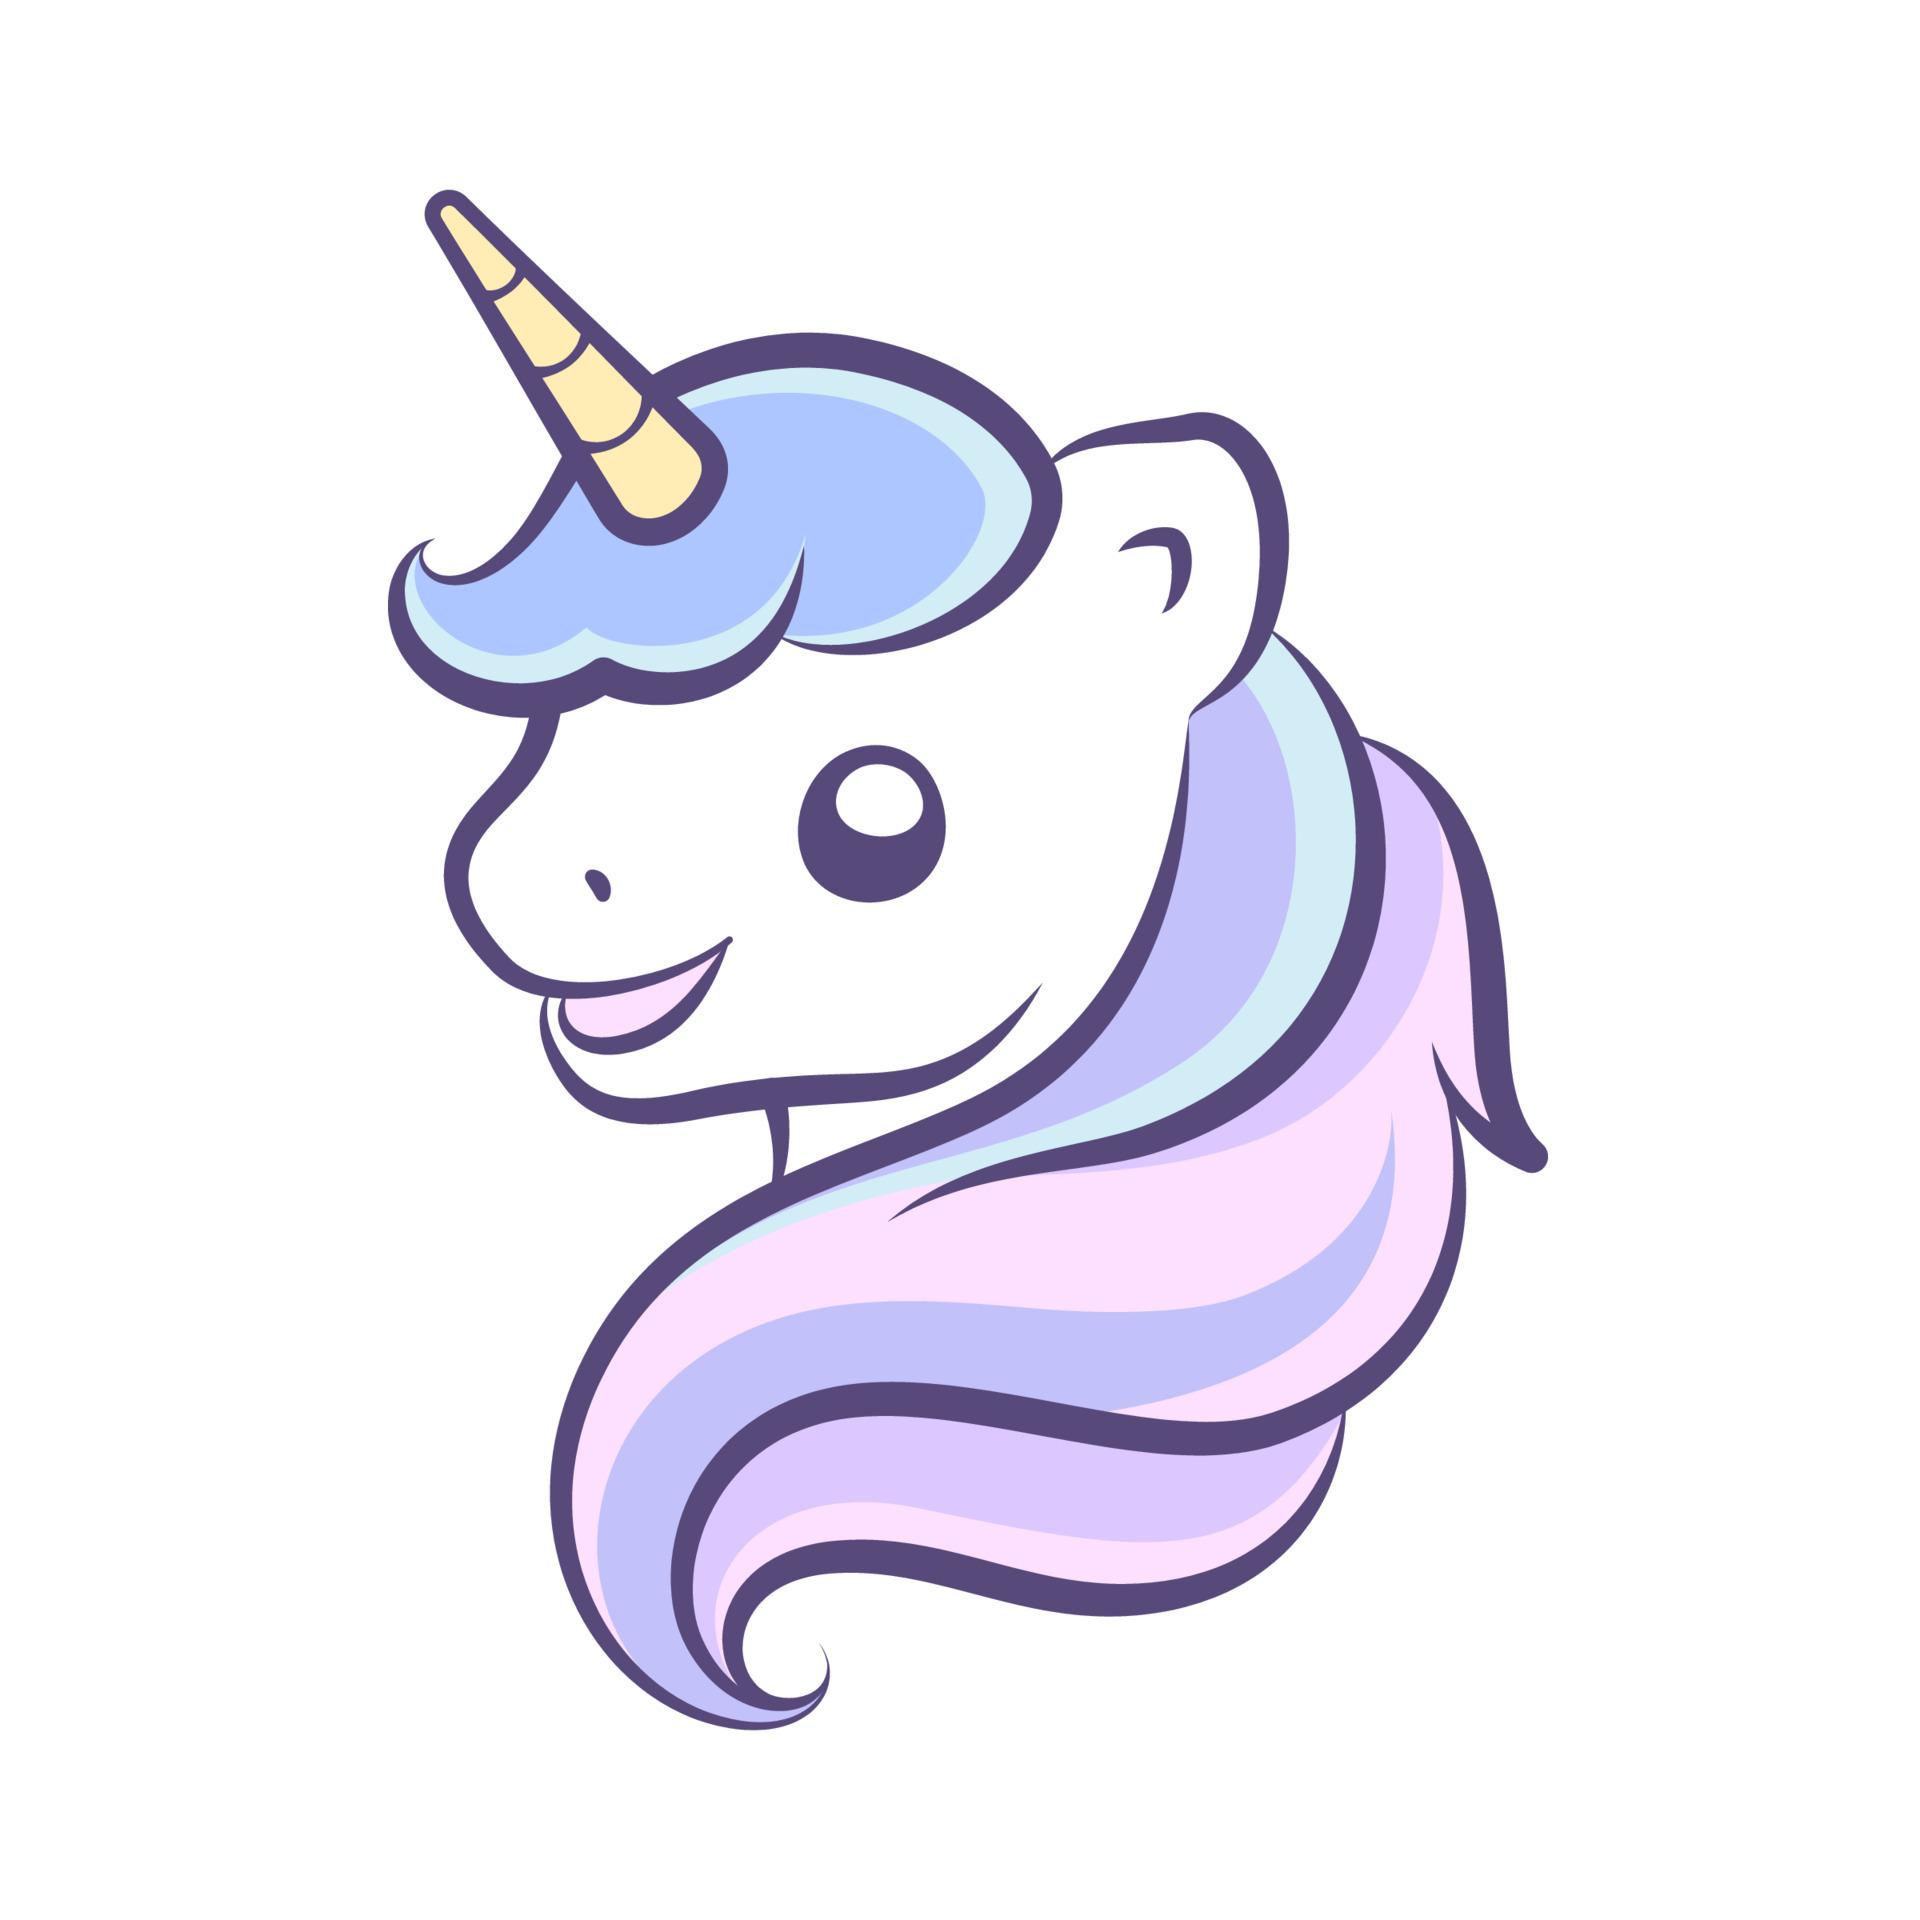 https://static.vecteezy.com/system/resources/previews/015/633/134/original/cute-happy-unicorn-head-illustration-mythical-creature-cartoon-design-print-for-kids-vector.jpg